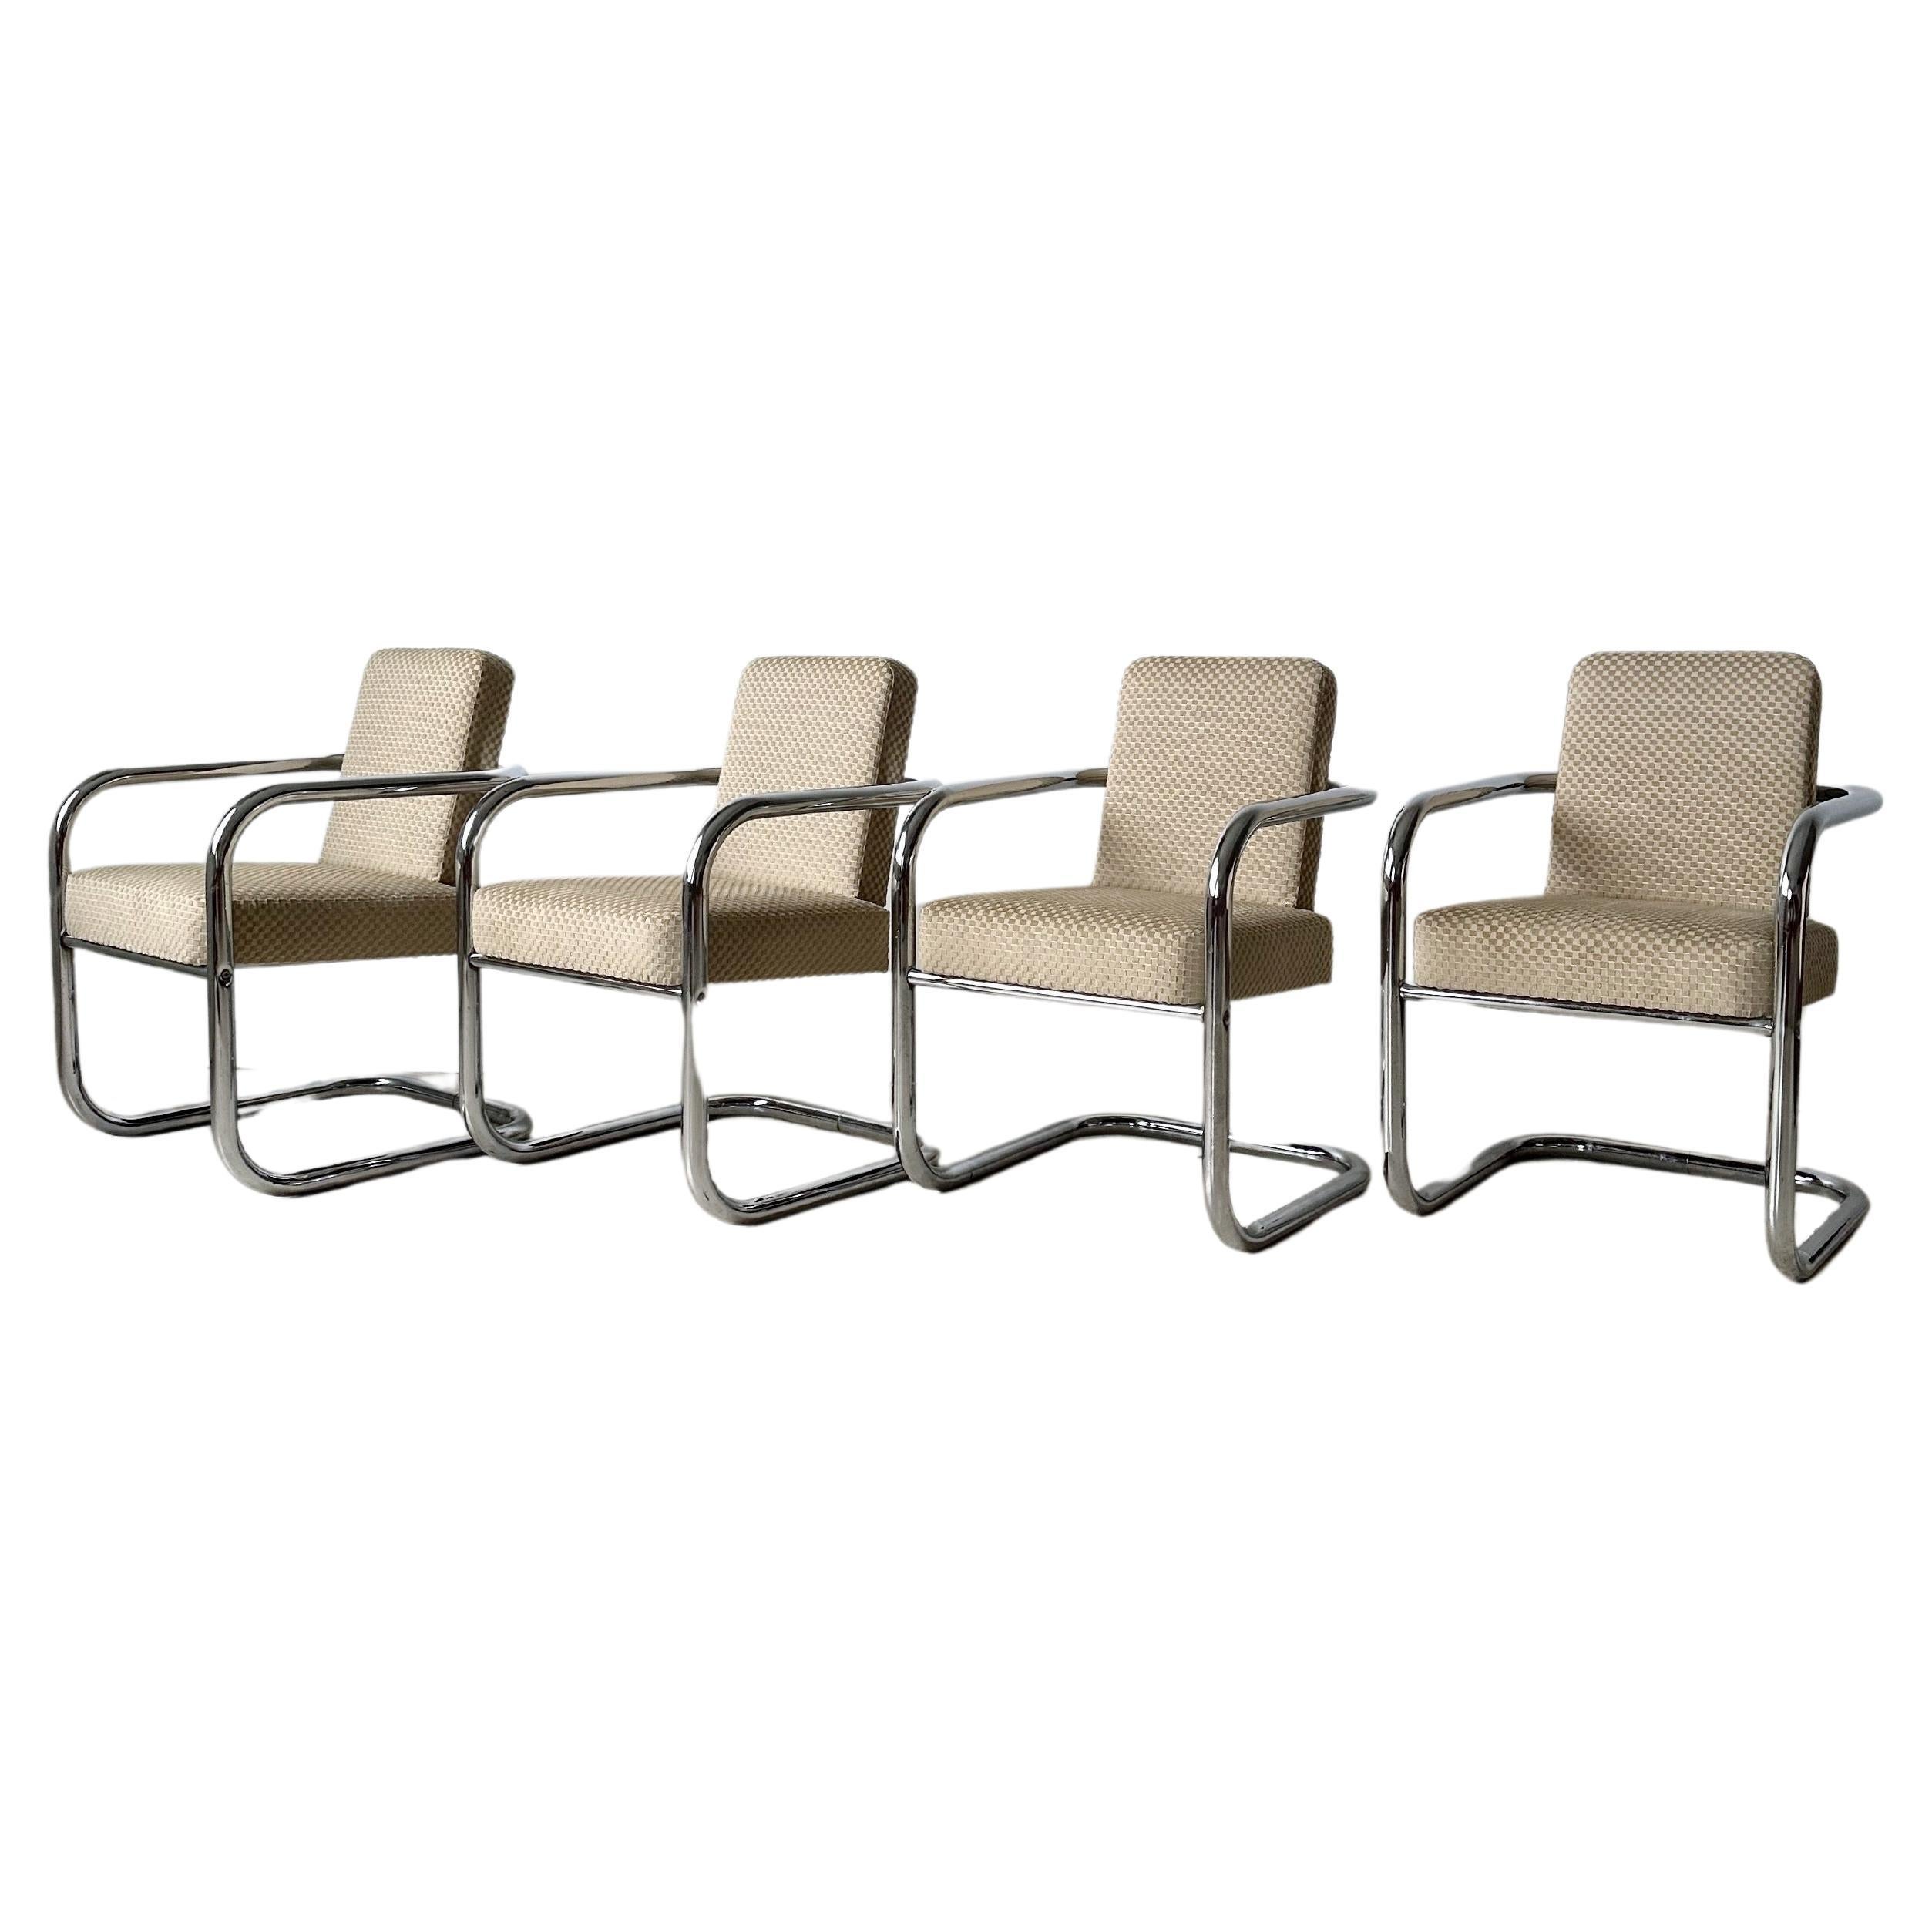 Cantilever Chrome & Checkered Velvet Dining Chairs, Set of 4